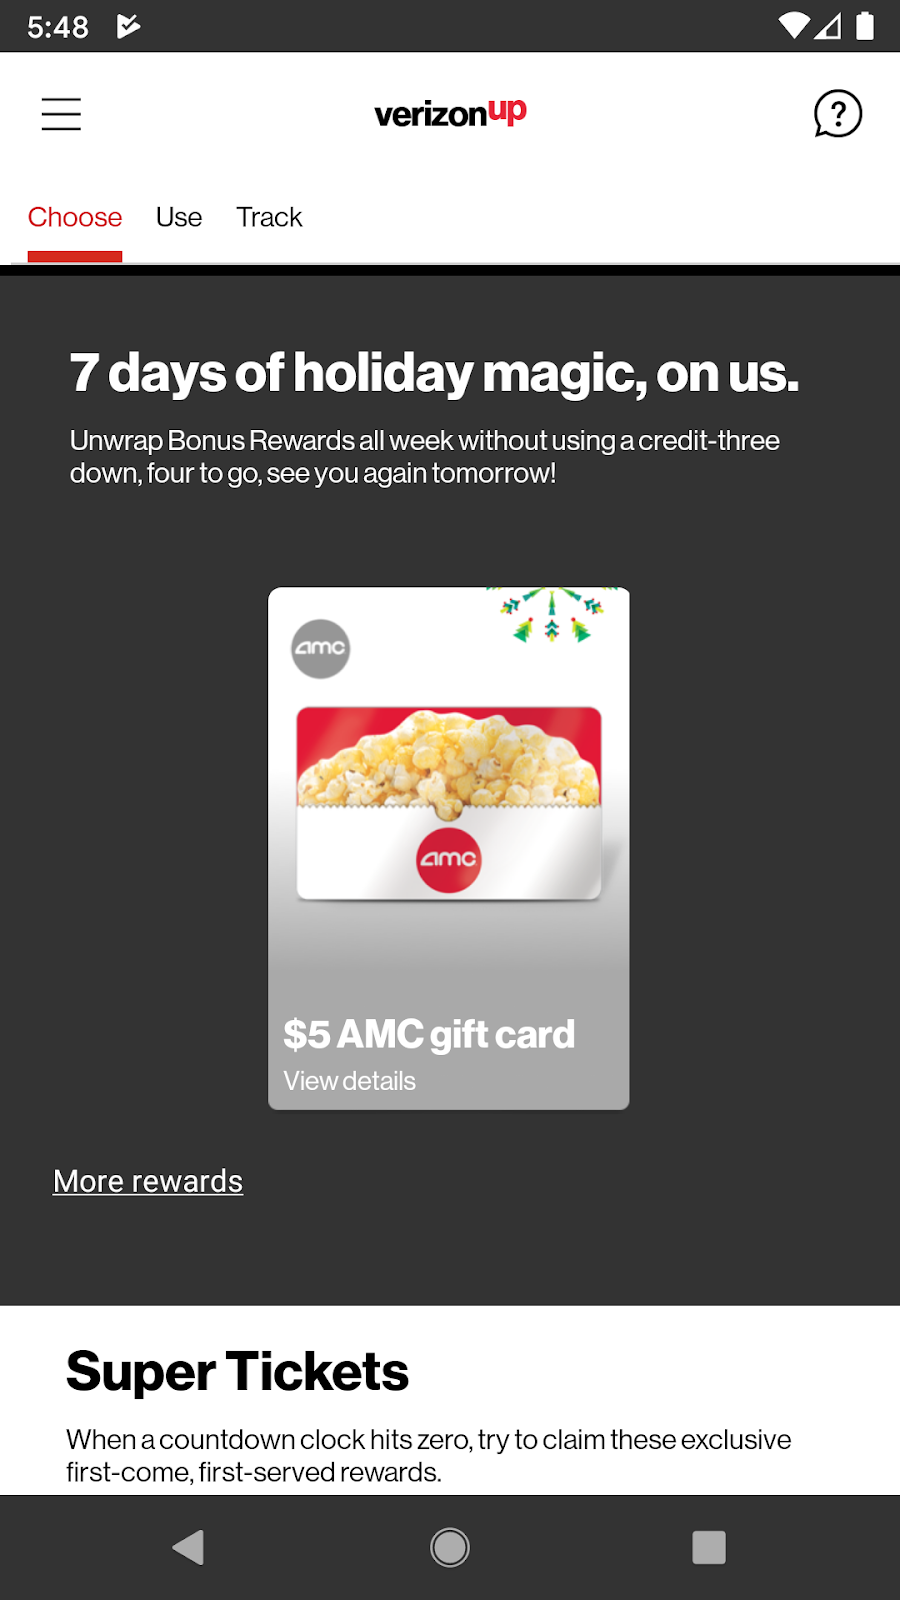 One Momma Saving Money: Verizon Up - Today score a #Free $5 AMC gift card